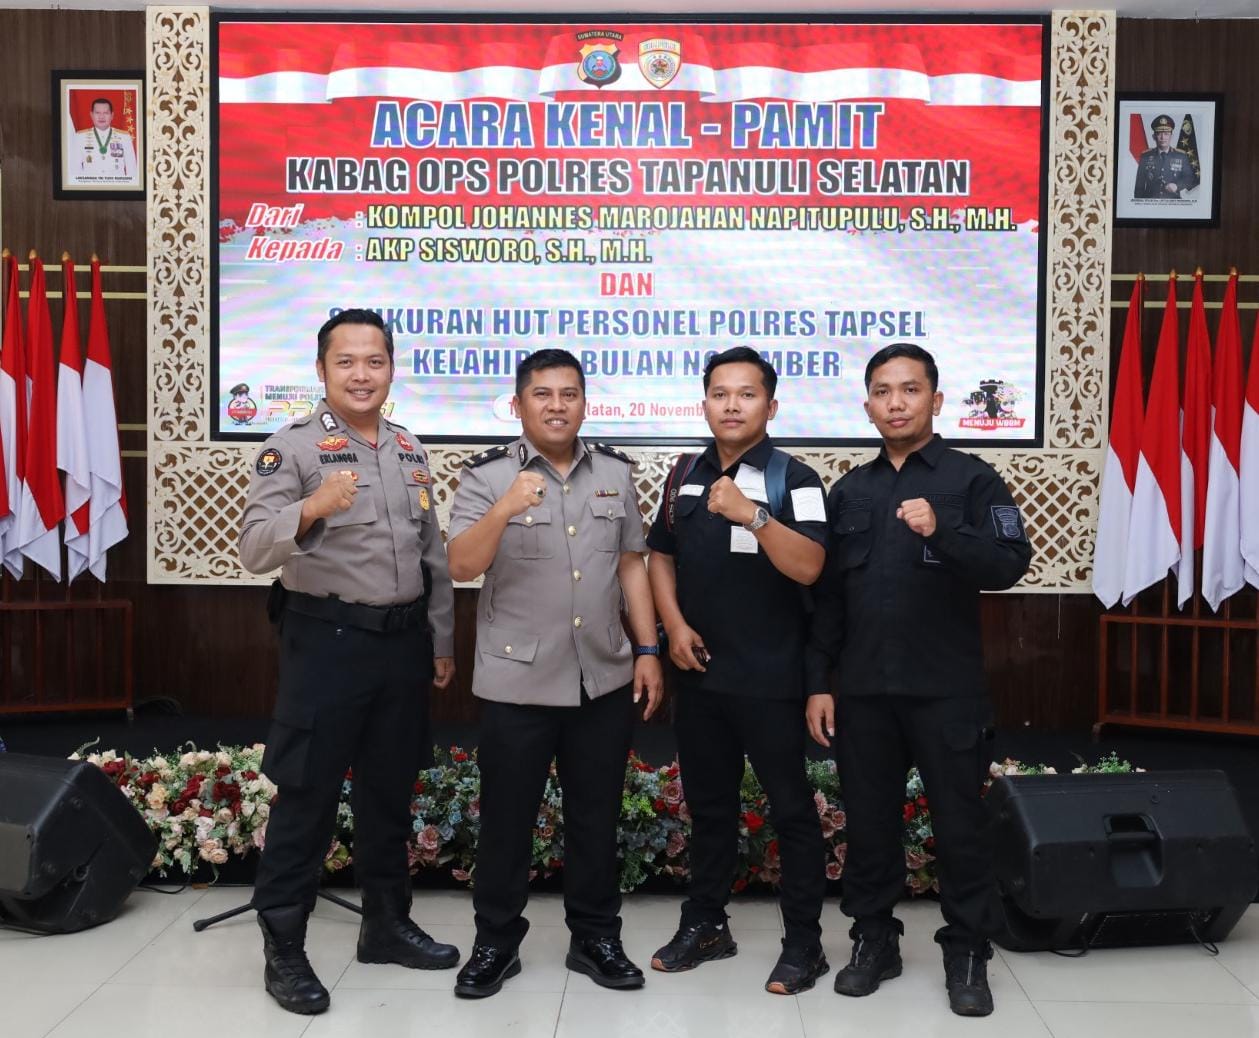 Kompol JM Napitupulu berfoto bersama dengan Plh Kasi Humas Polres Tapsel, Brigadir Erlangga Gautama Nasution, dan Tim, usai Upacara Sertijab Kabag Ops